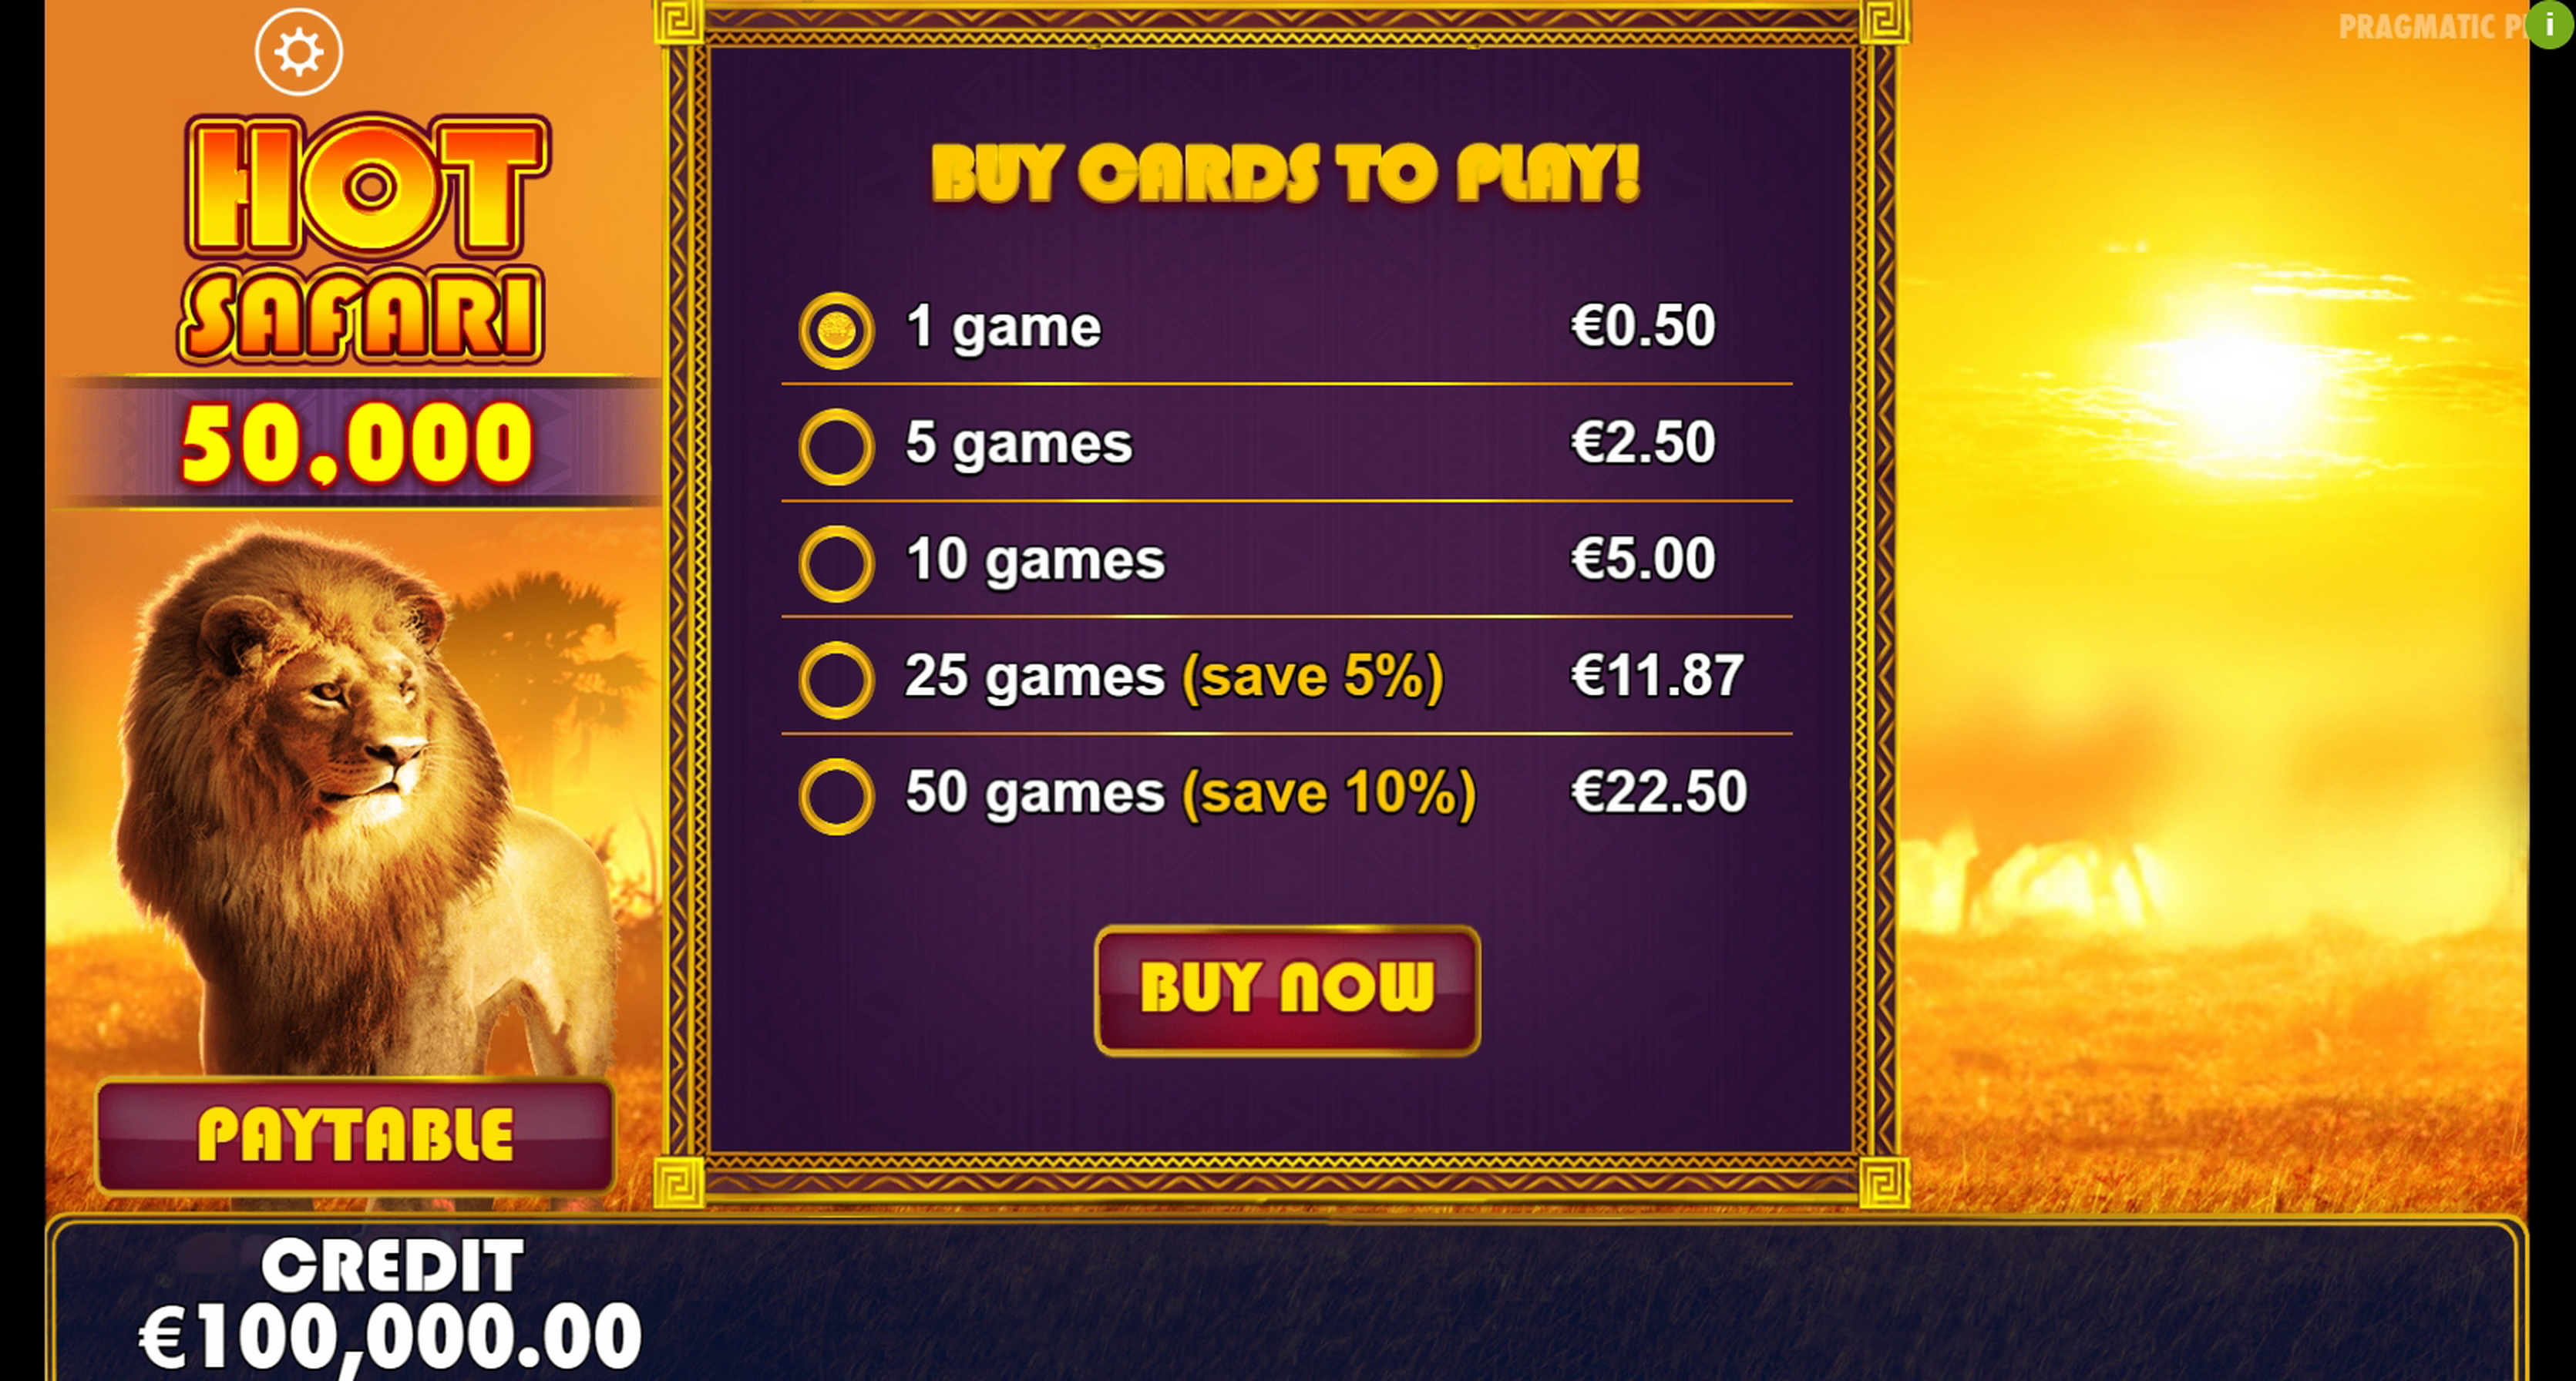 Play Hot Safari Scratchcard Free Casino Slot Game by Pragmatic Play